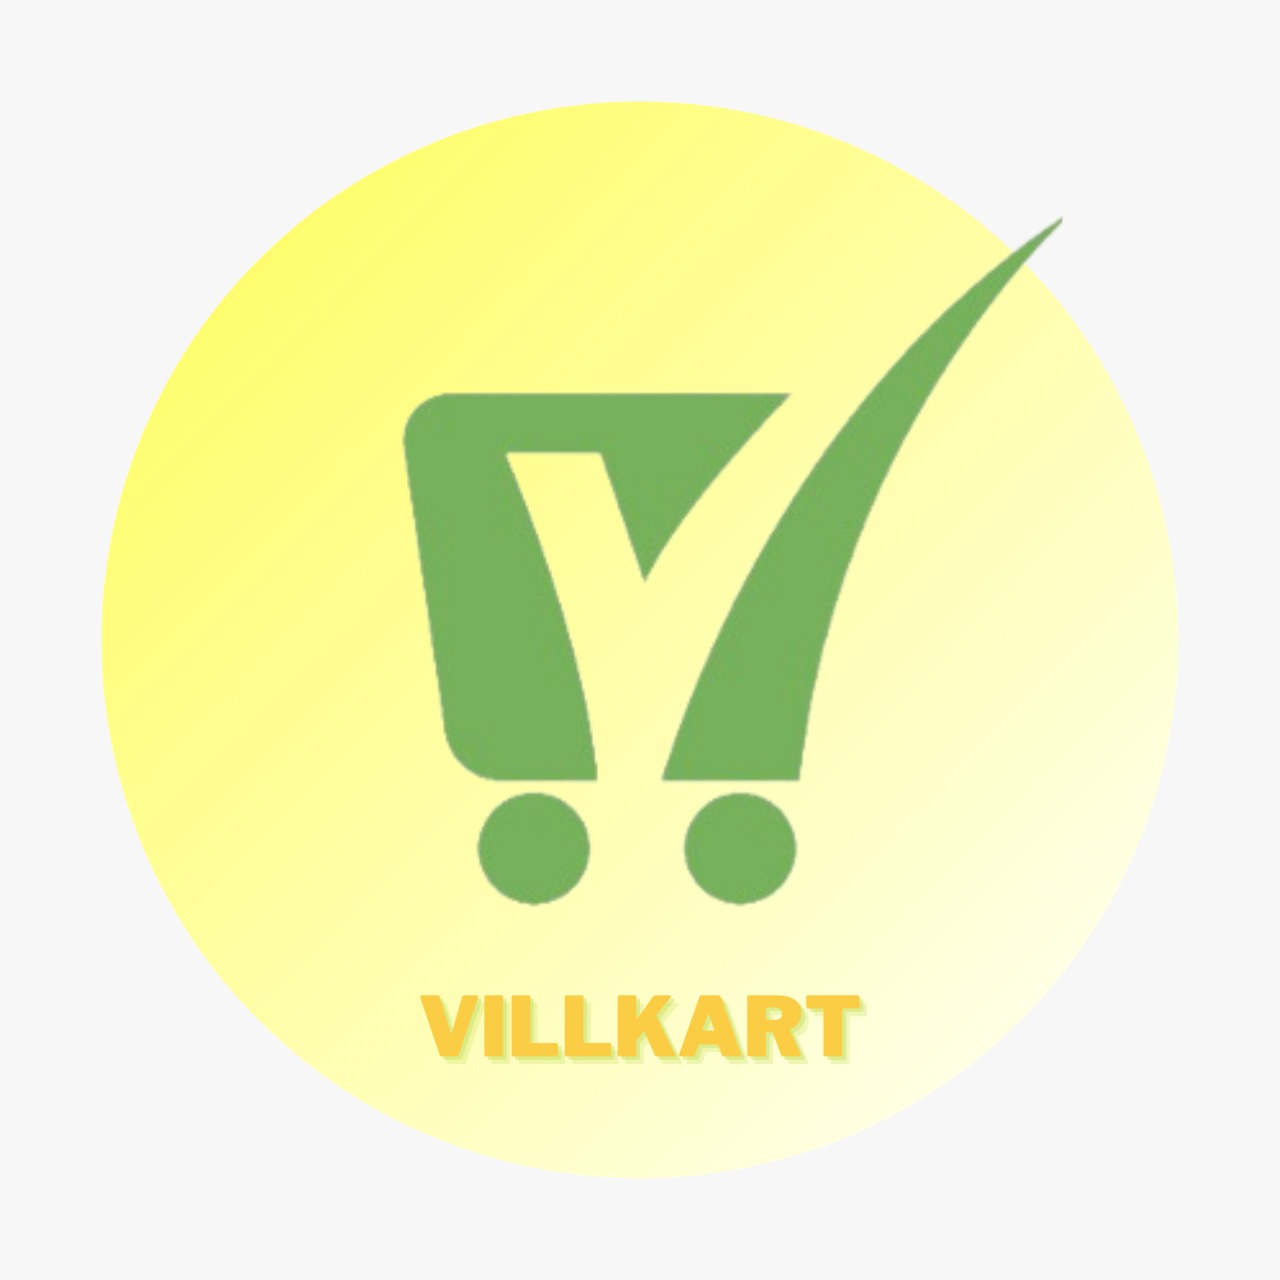 VILLKART means ‘Village